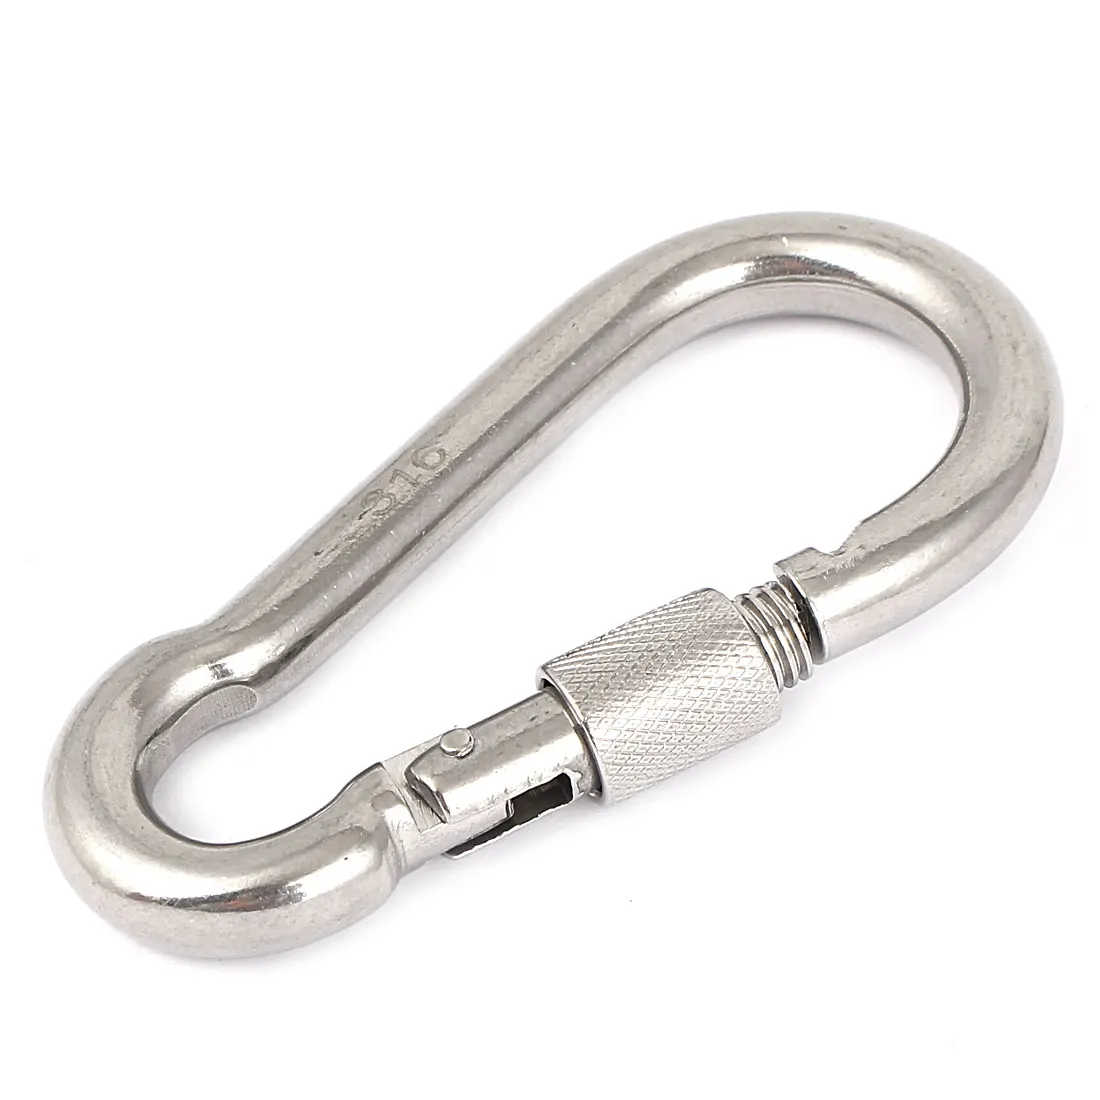 10Mm Thickness 316 Stainless Steel Screw Lock Carabiner Hook Keychain | Спорт и развлечения